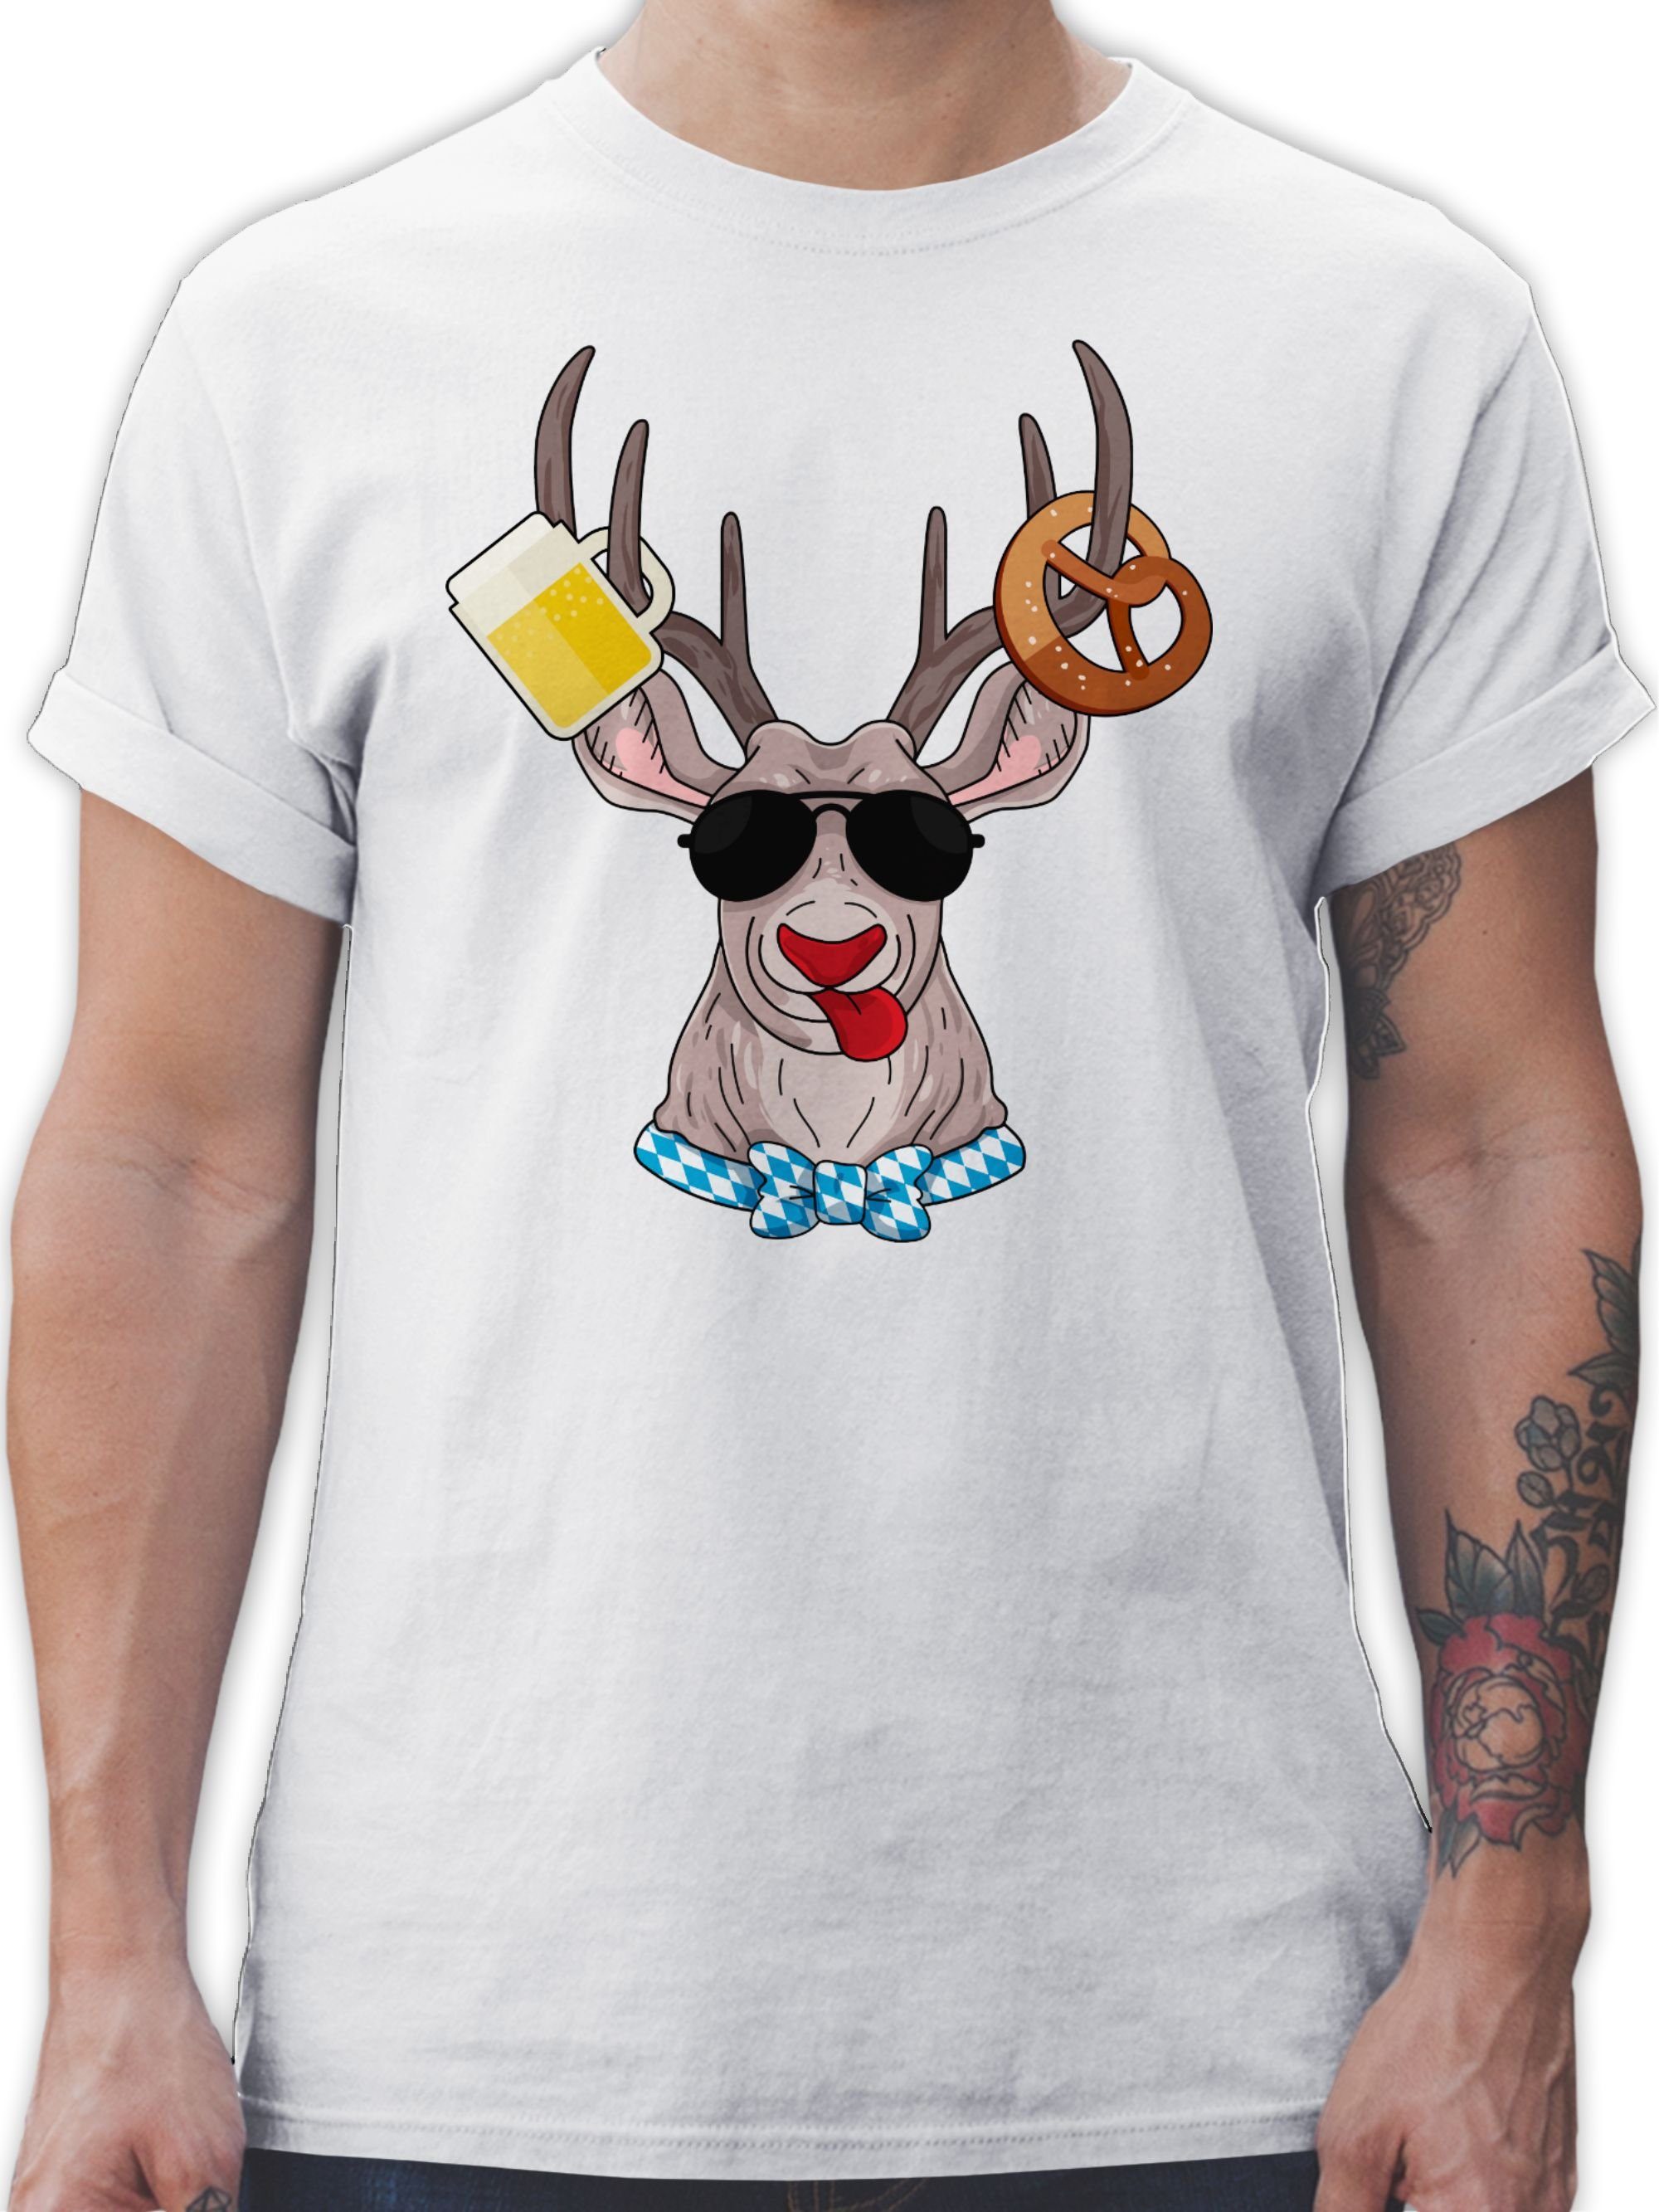 Shirtracer T-Shirt Oktoberfest Hirsch Mode für Oktoberfest Herren 3 Weiß